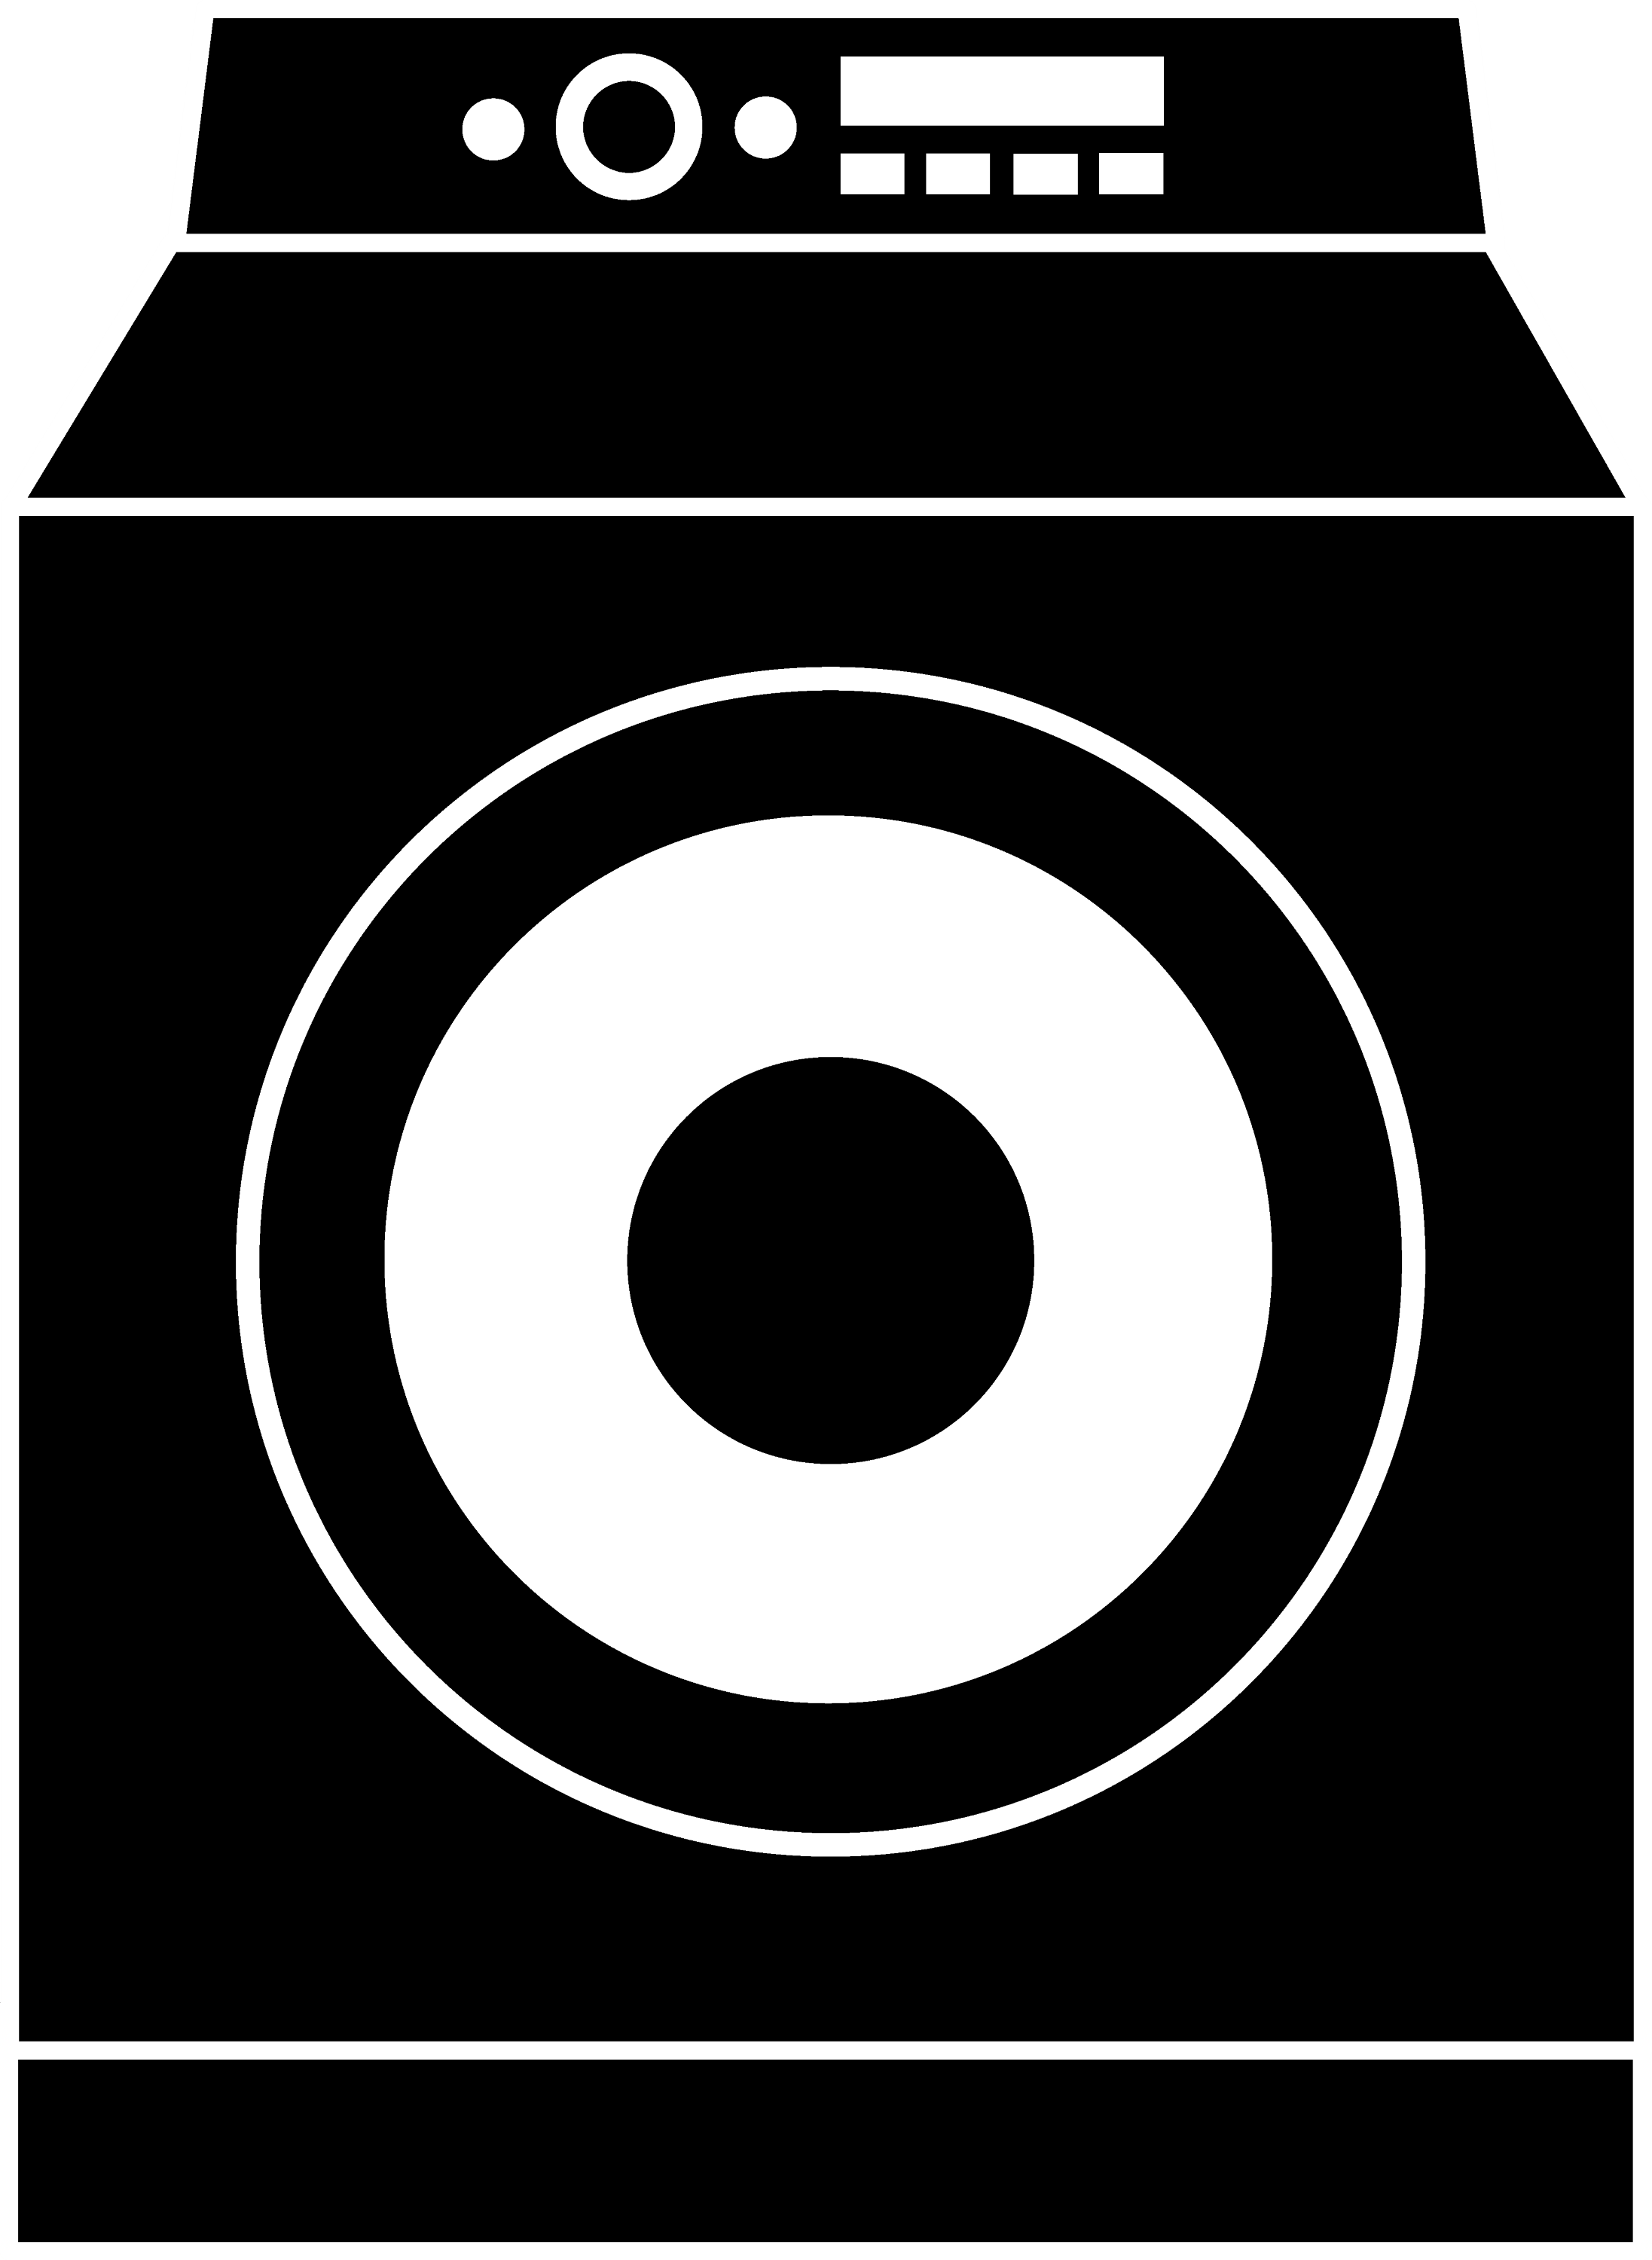 Washing Machine Silhouette Logo - Free Clip Art